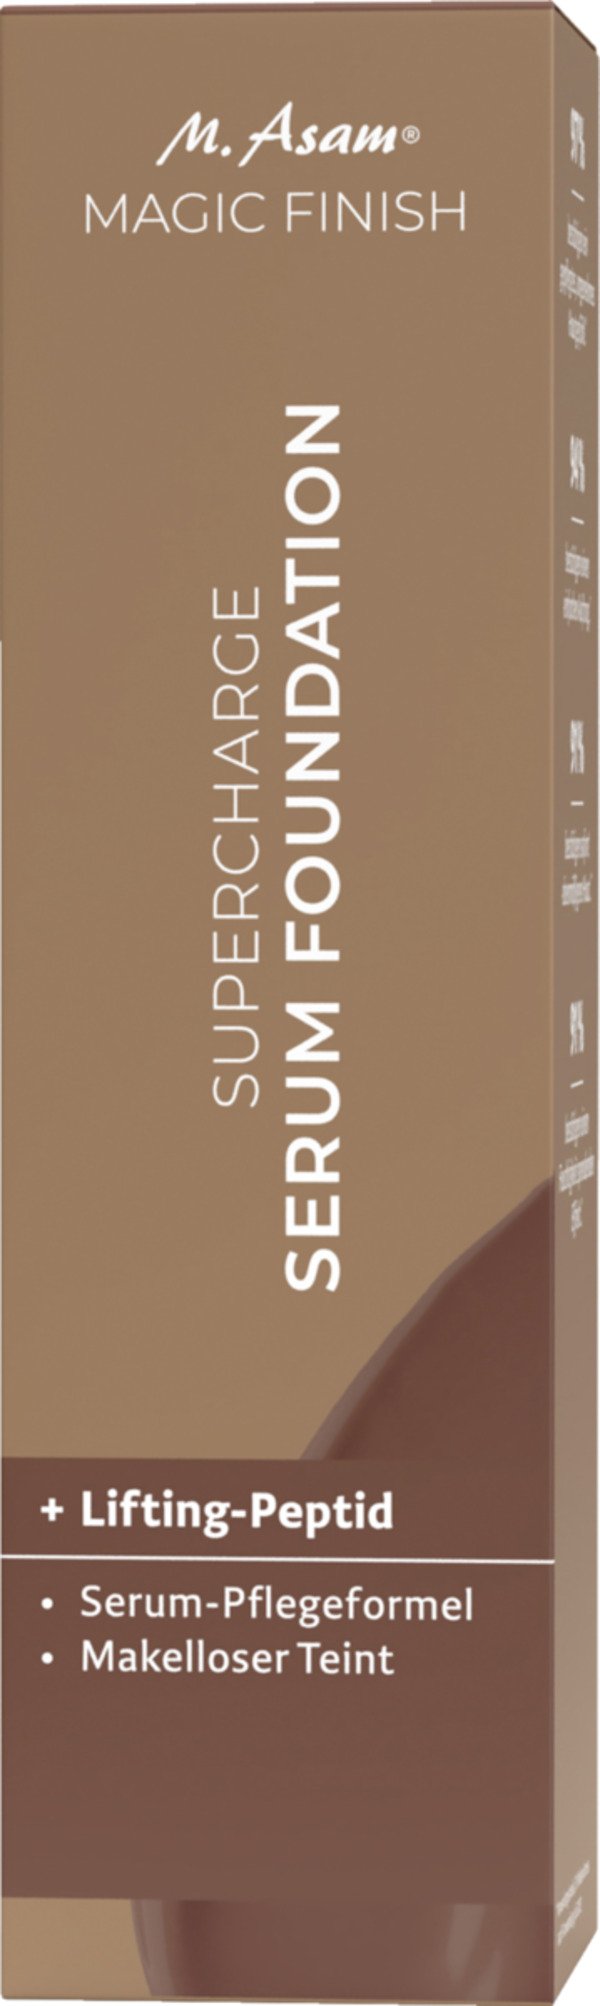 Bild 1 von M. Asam Magic Finish Supercharge Serum Foundation 480 deep almond